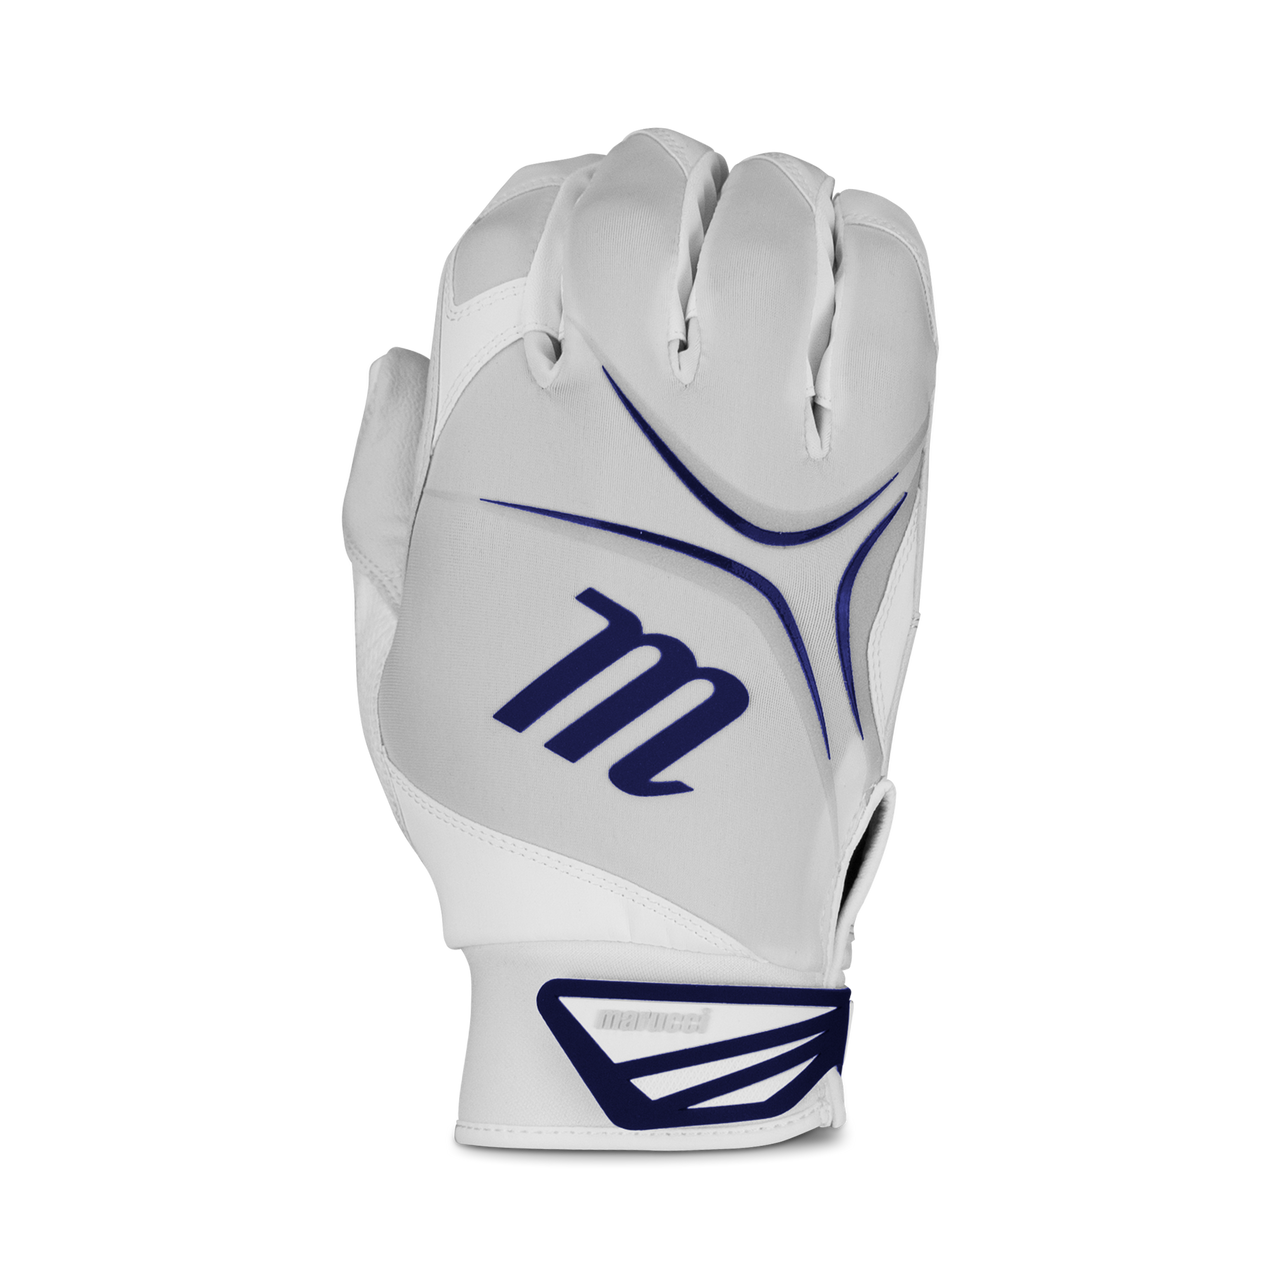 Marucci FX Softball Batting Gloves White/Navy Blue Large